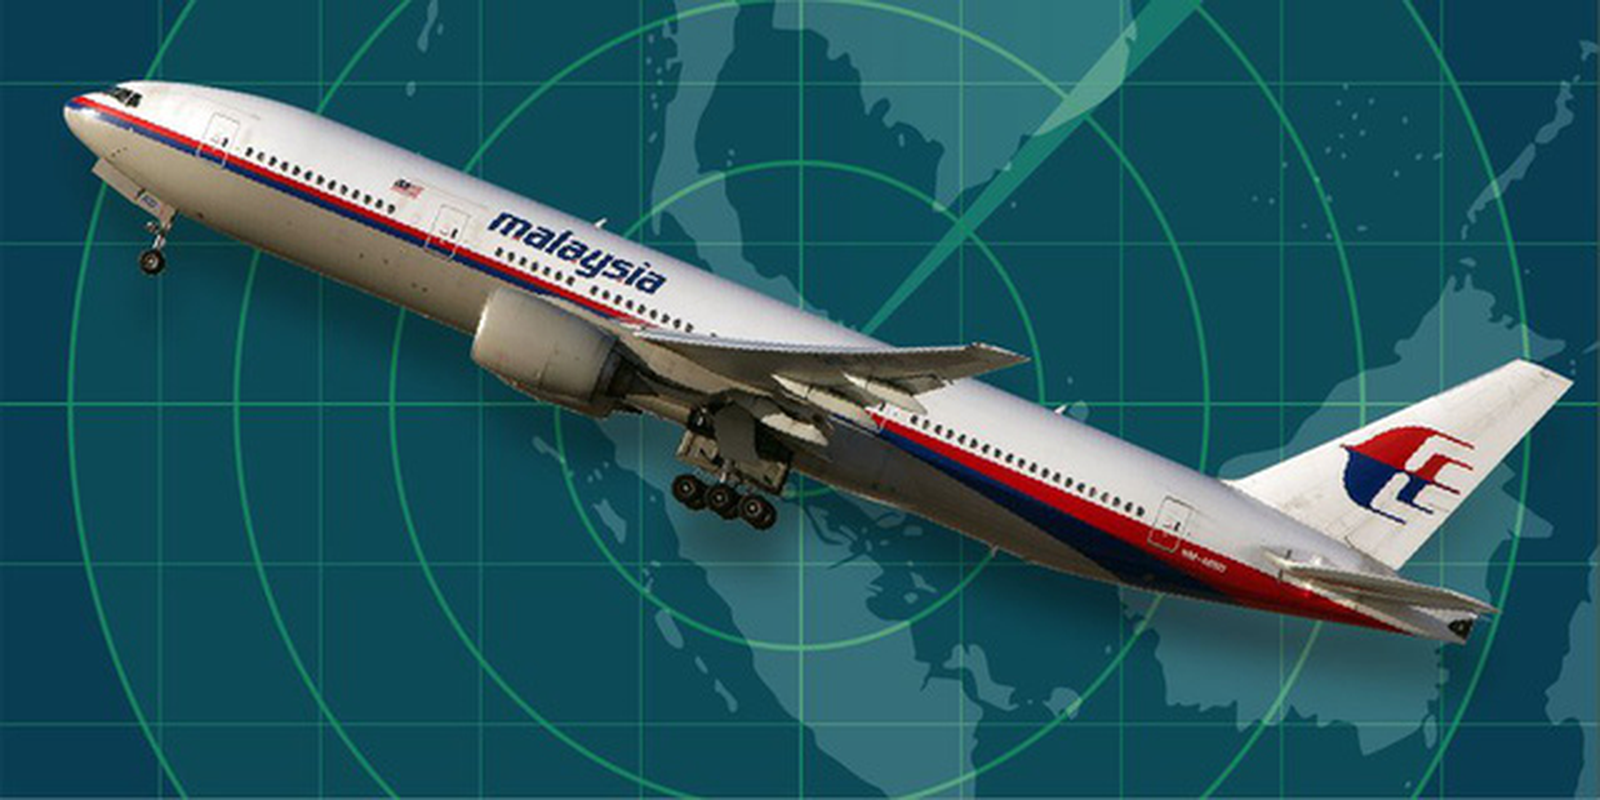 Xon xao buc anh xac chiec may bay huyen thoai MH370?-Hinh-7